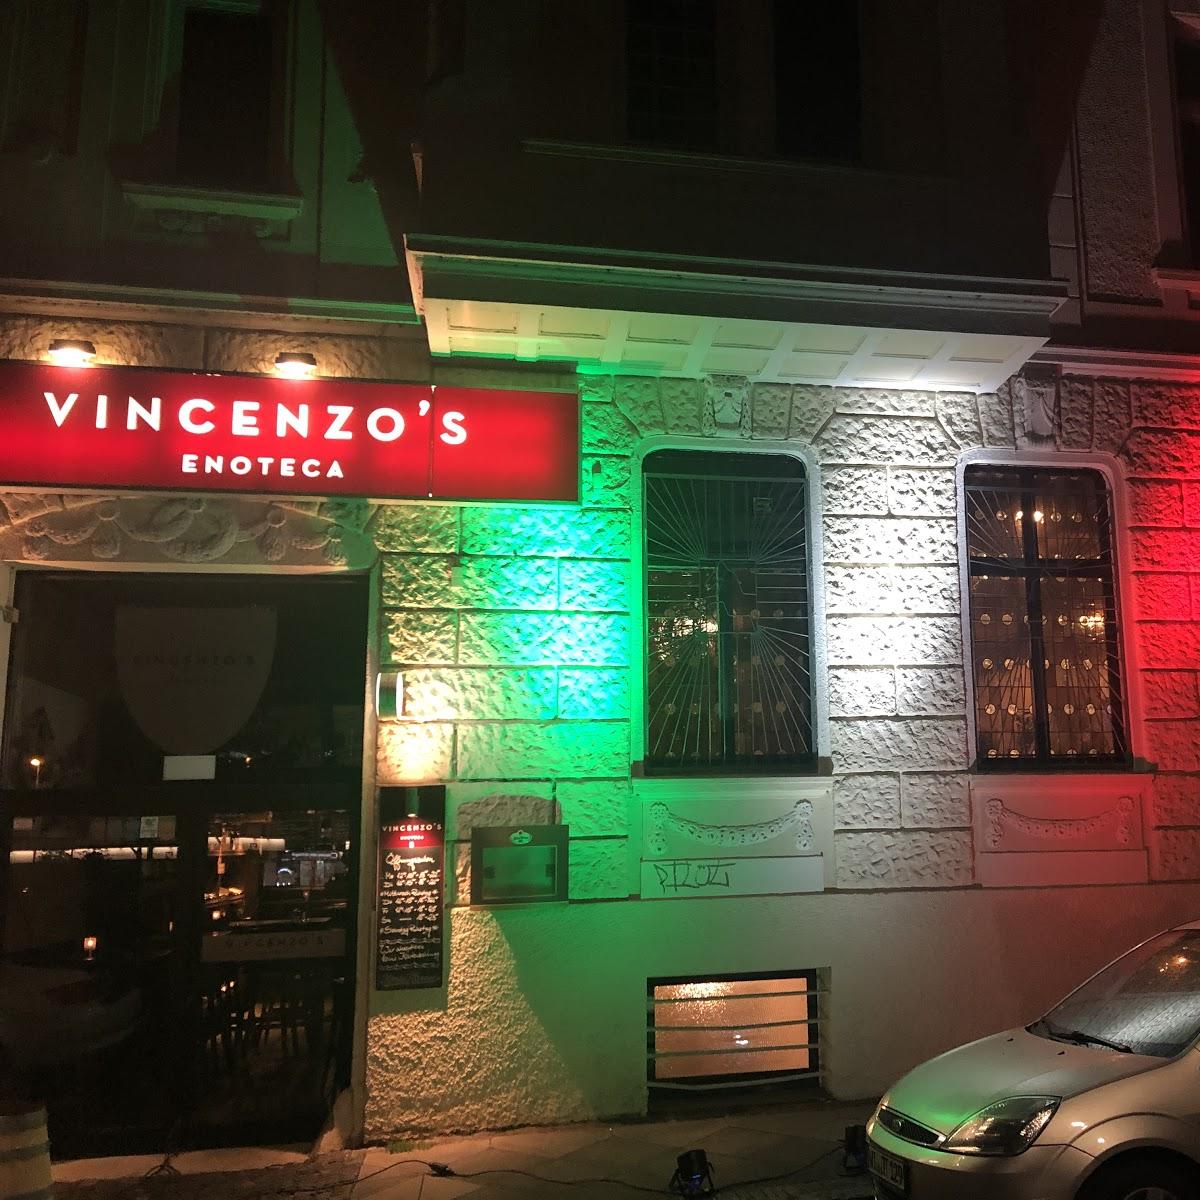 Restaurant "Vincenzo